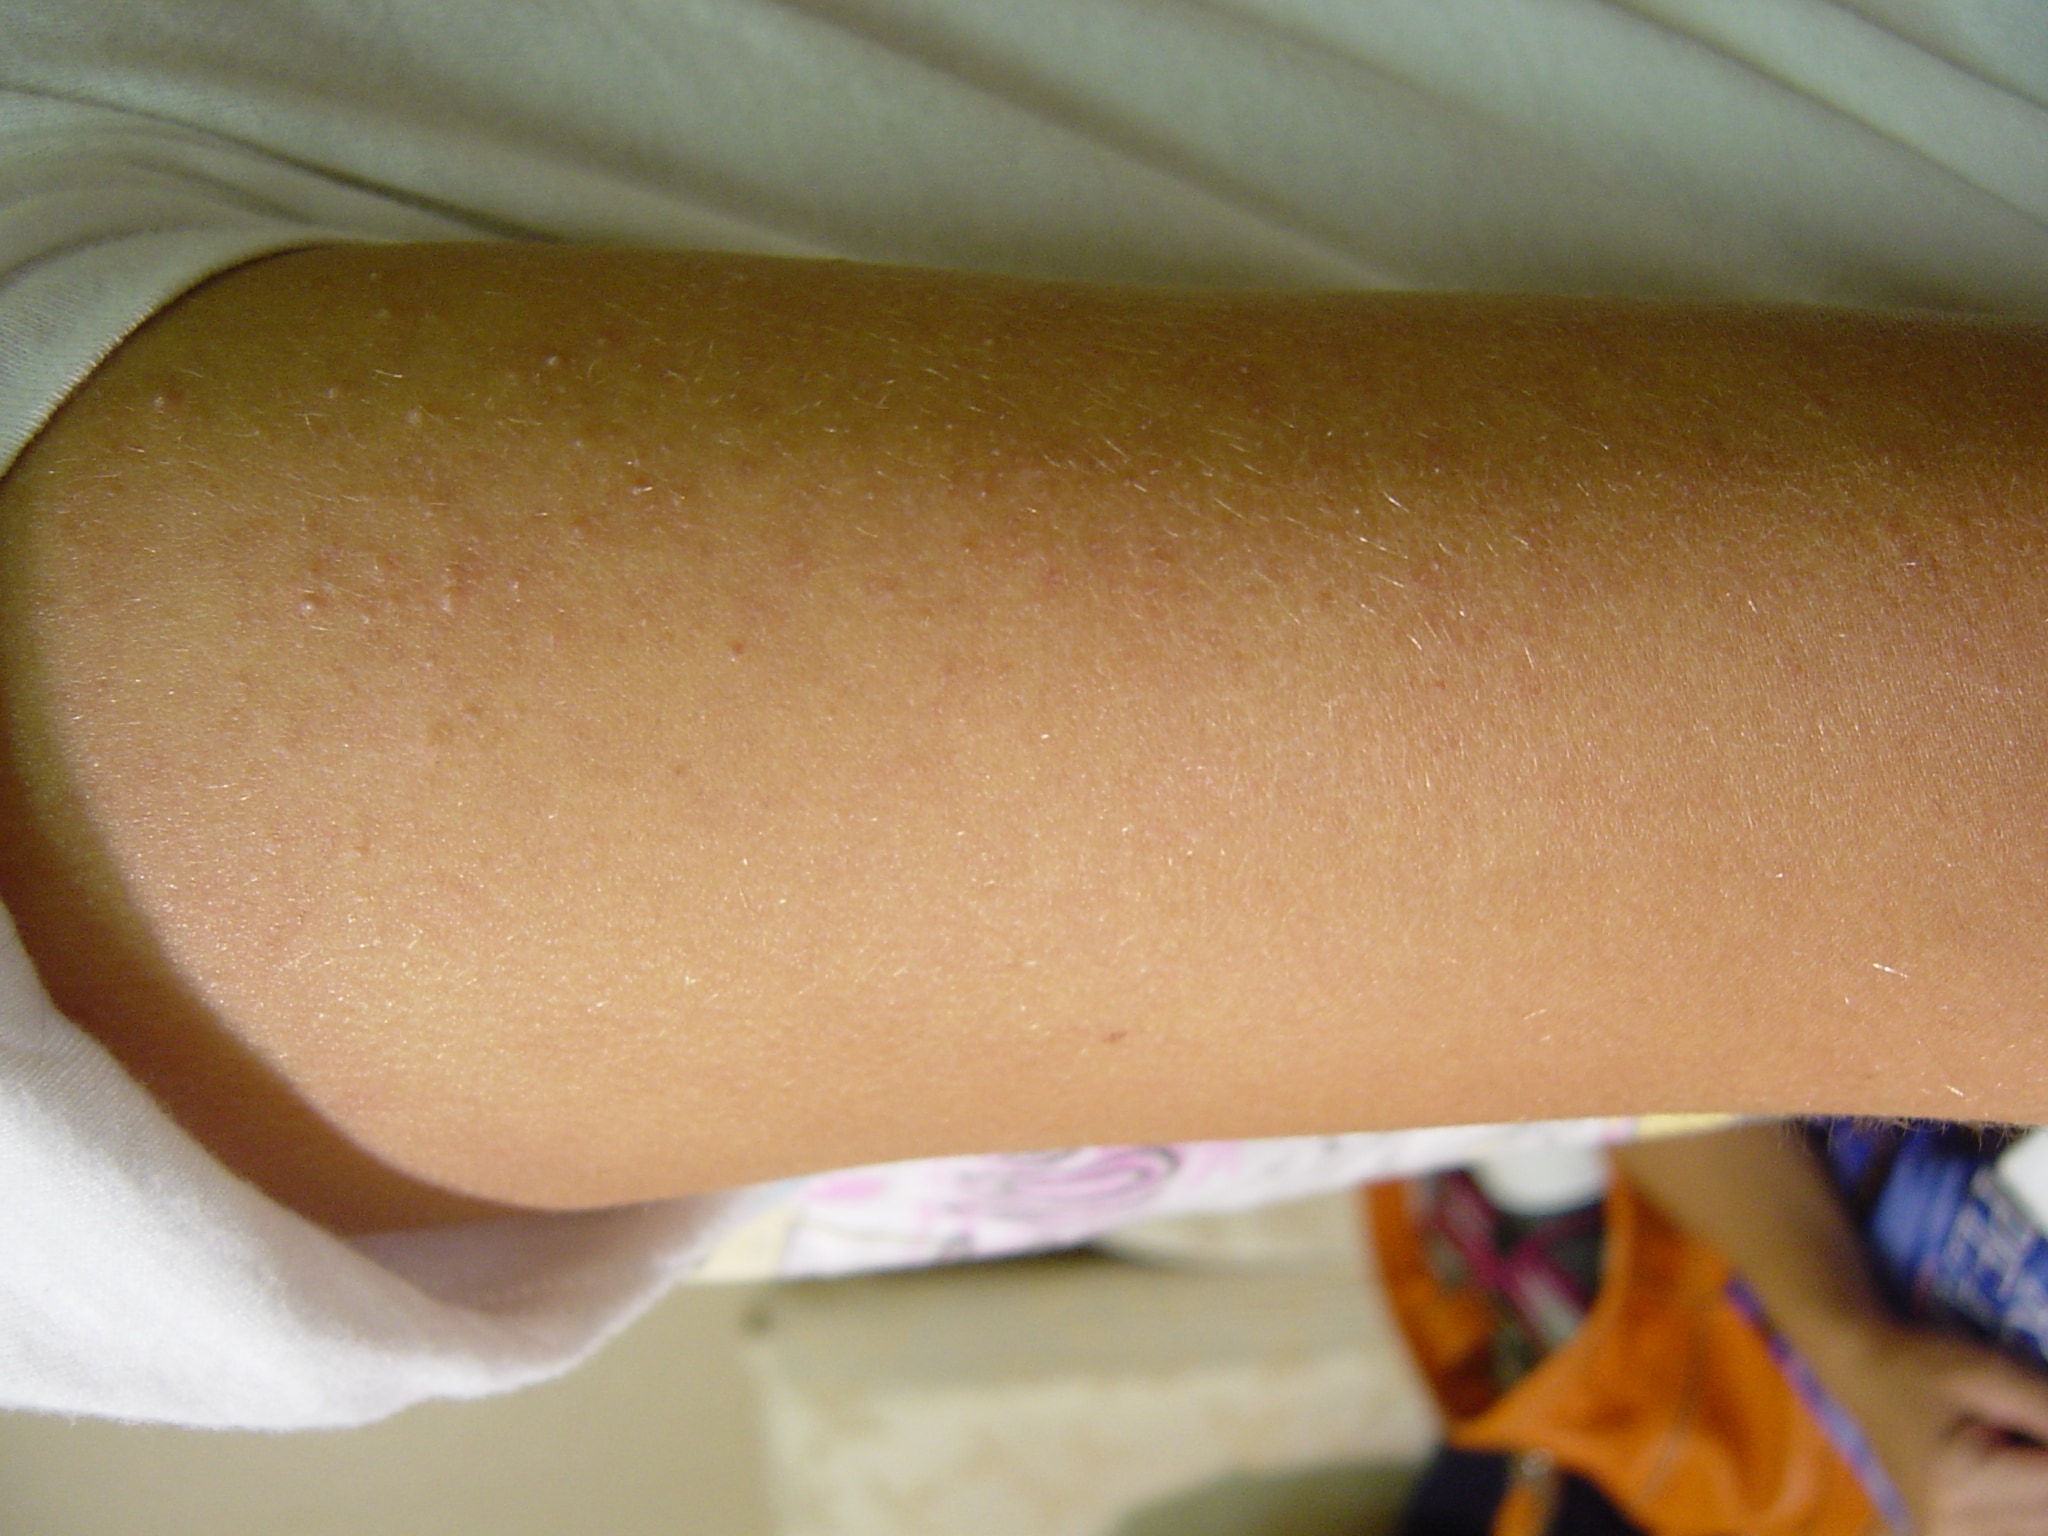 Upper Arm Bumps - Dermatology - MedHelp